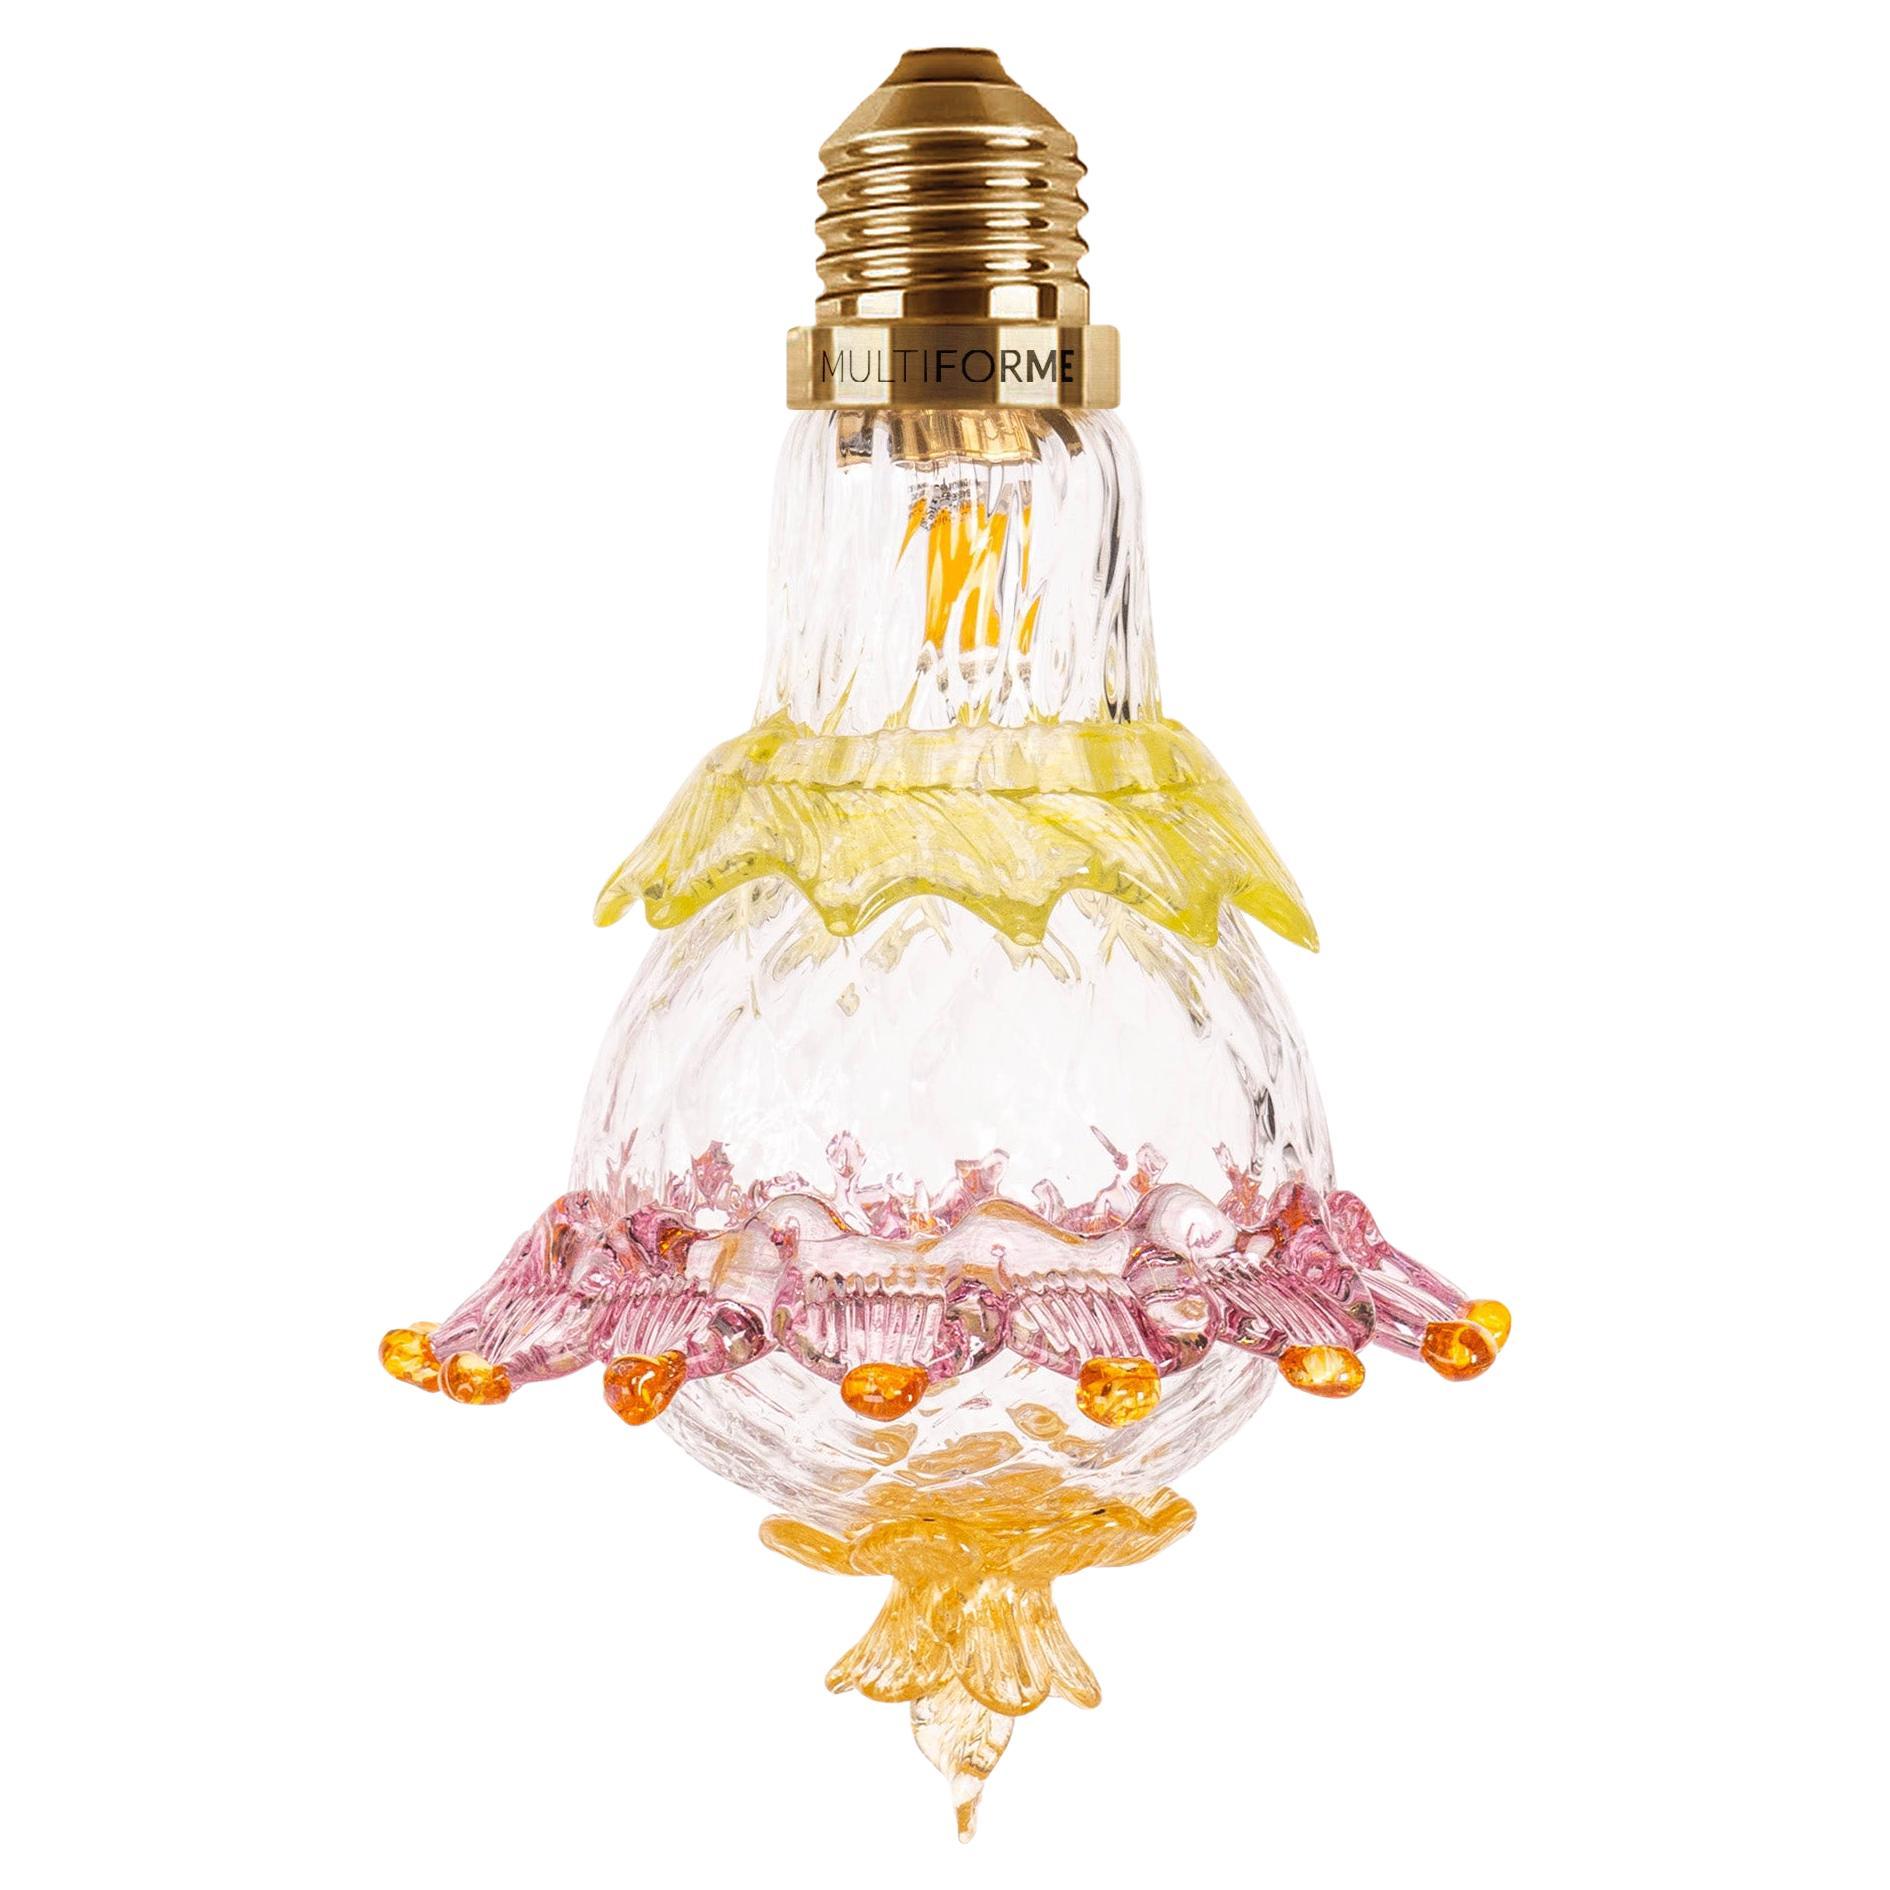 Artistic glass lightbulb chandelier Murano Bulb Marcantonio X Multiforme #10 For Sale